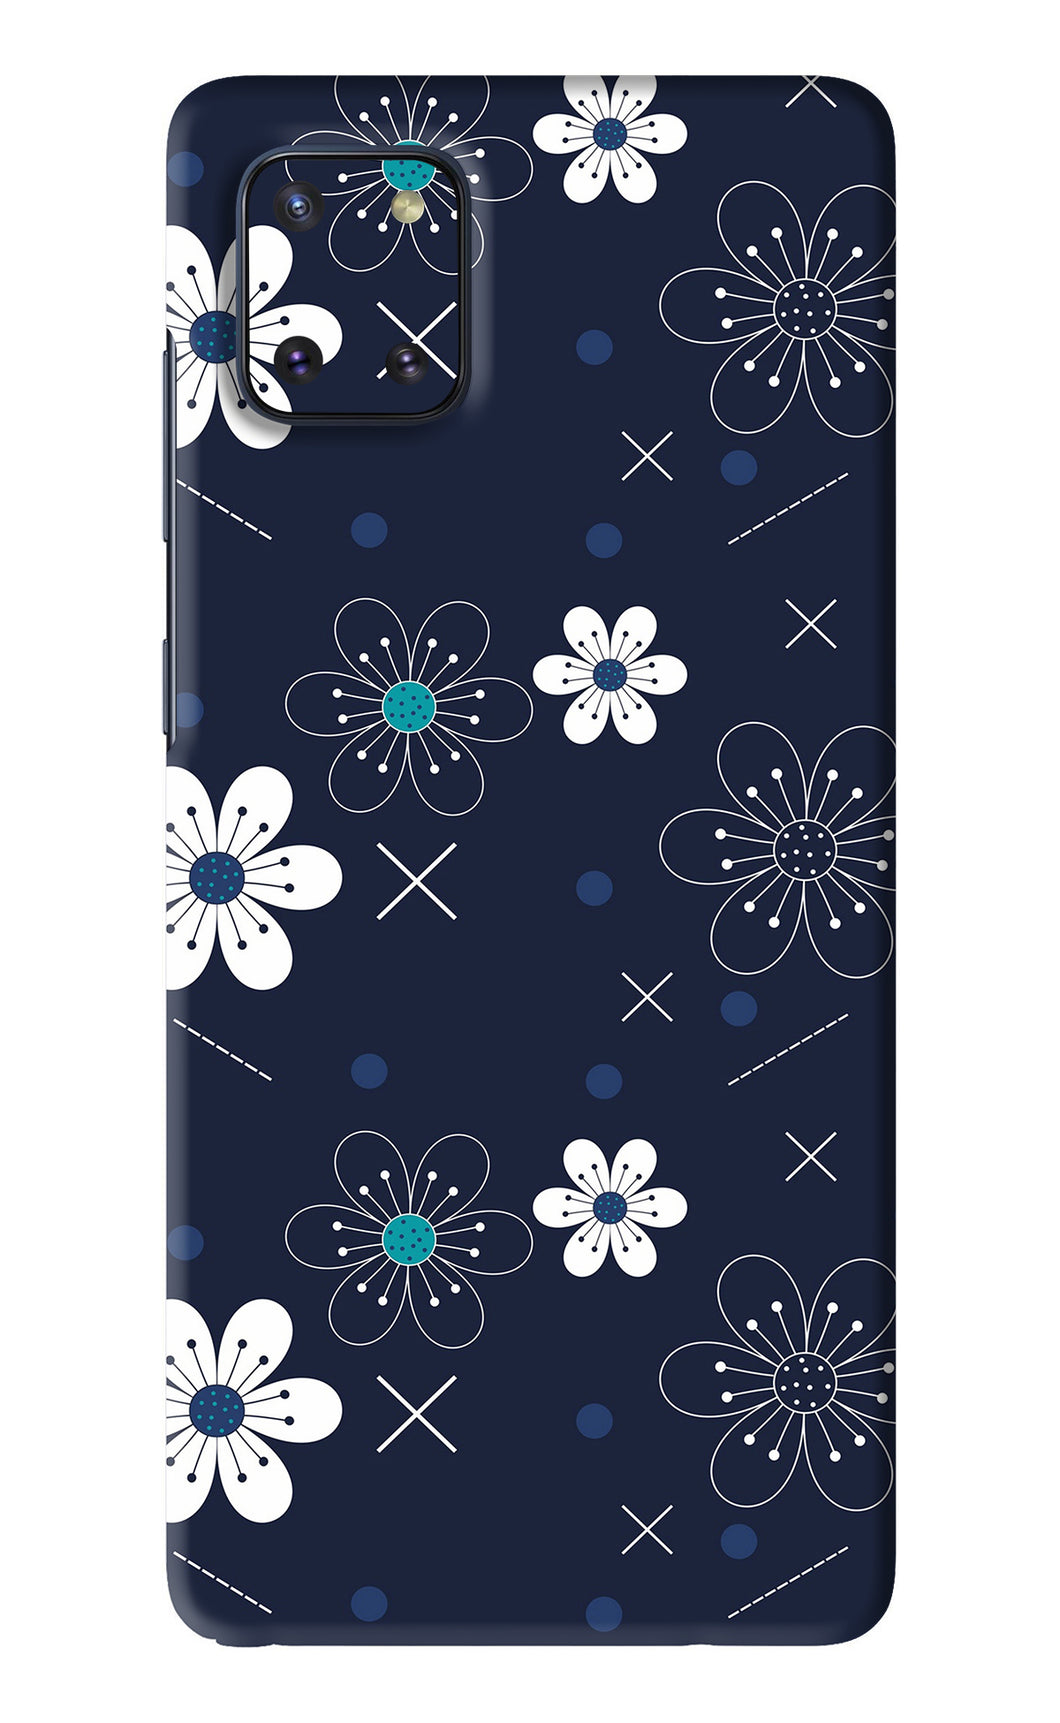 Flowers 4 Samsung Galaxy Note 10 Lite Back Skin Wrap